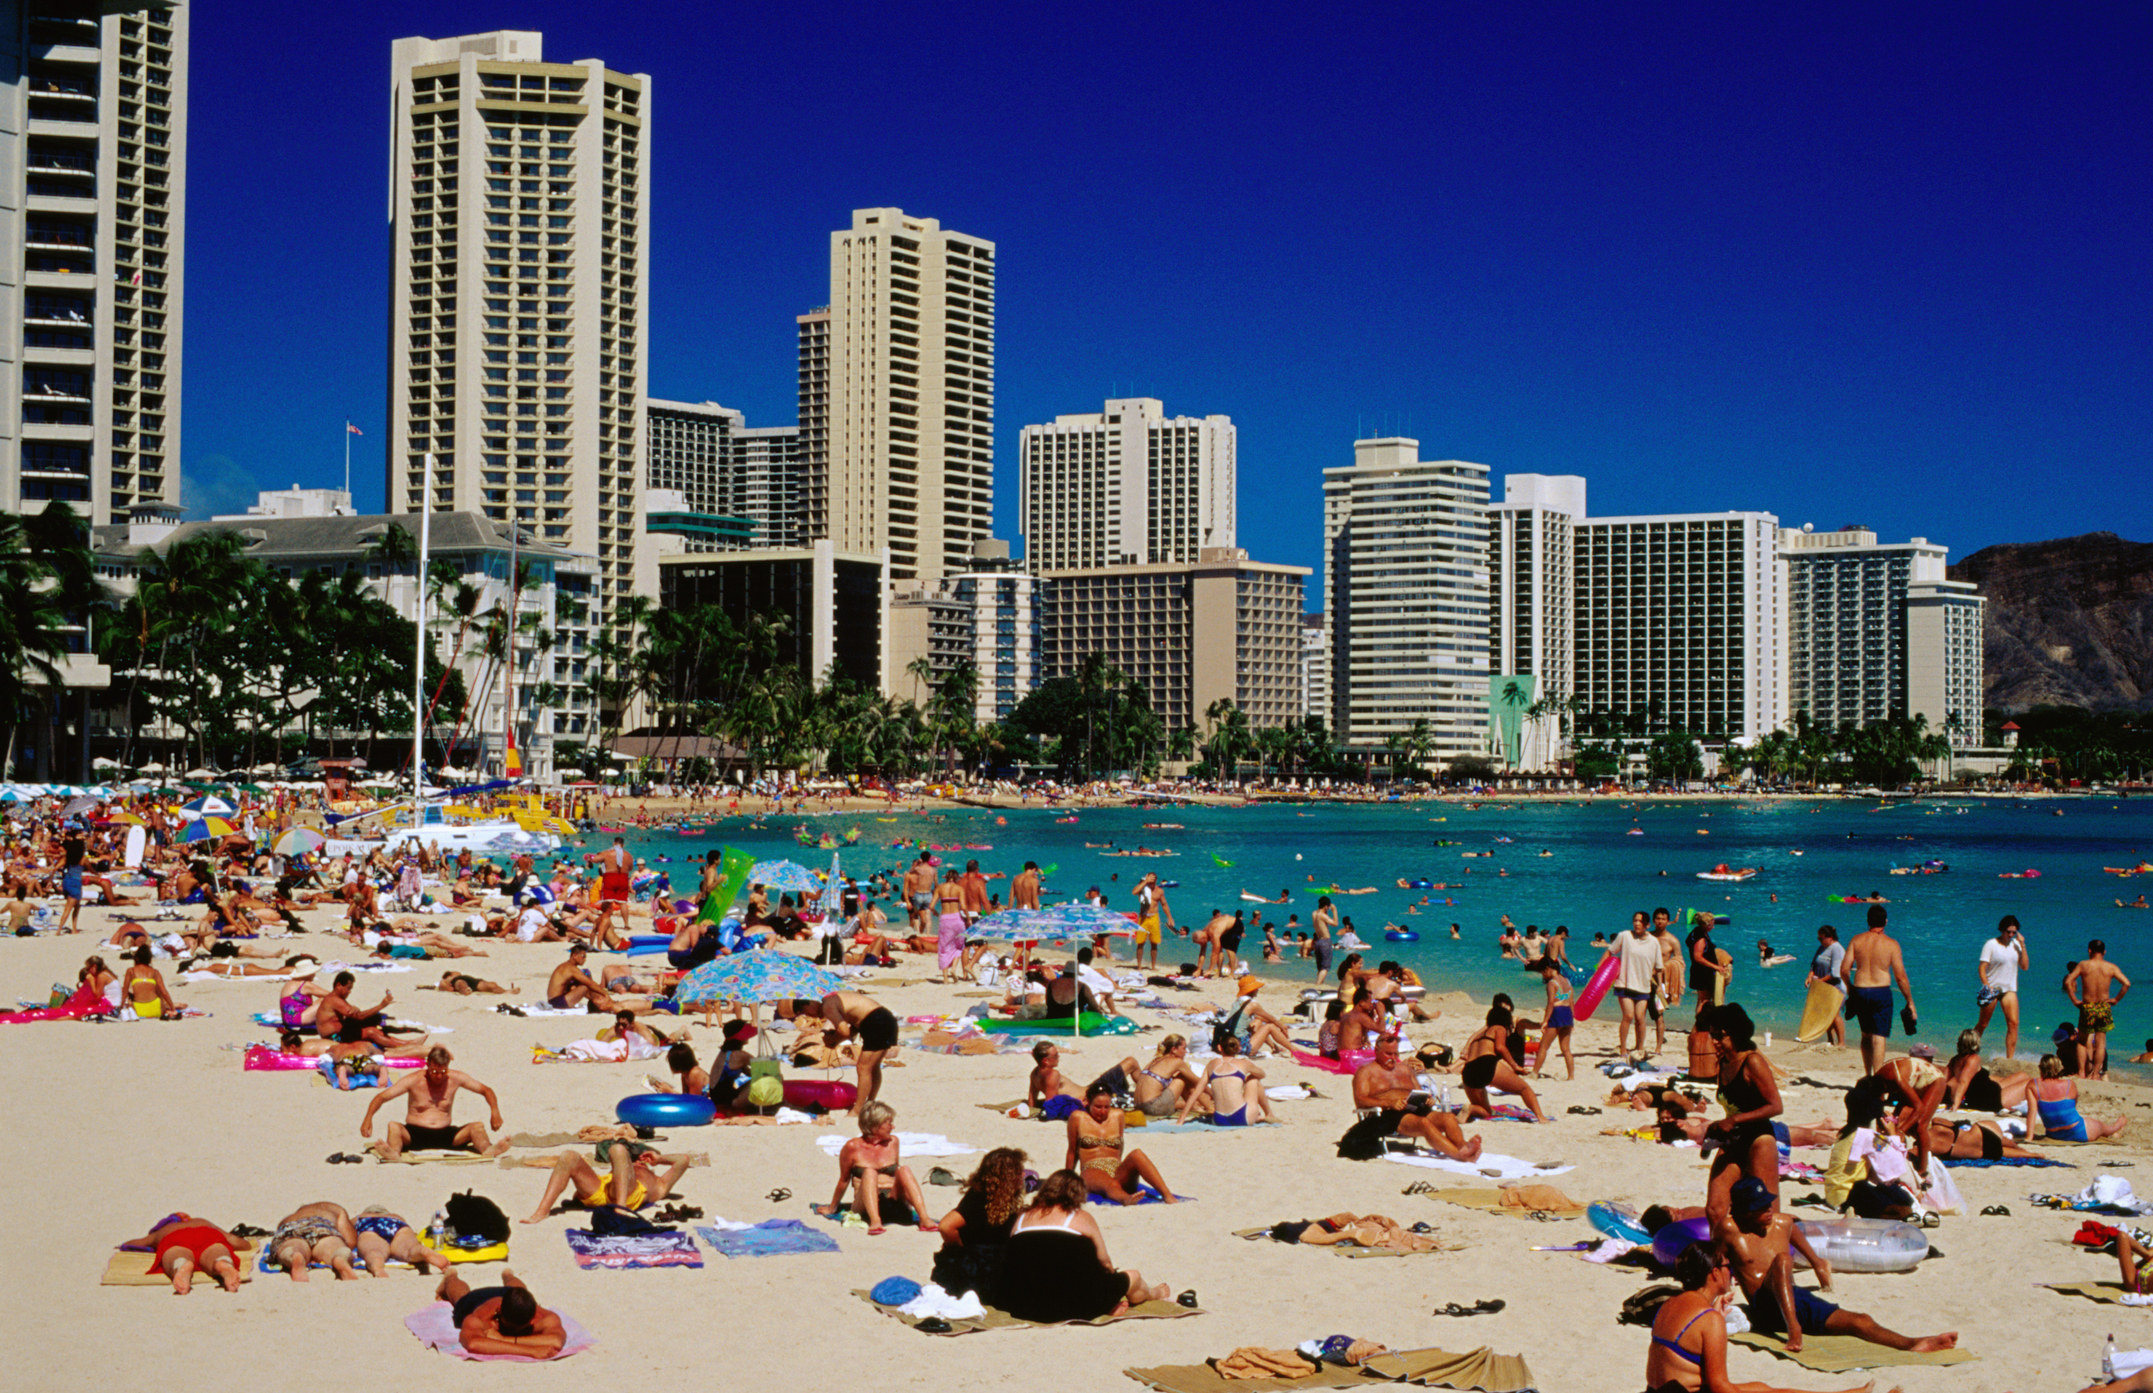 Tourists on Waikiki beach in Honolulu